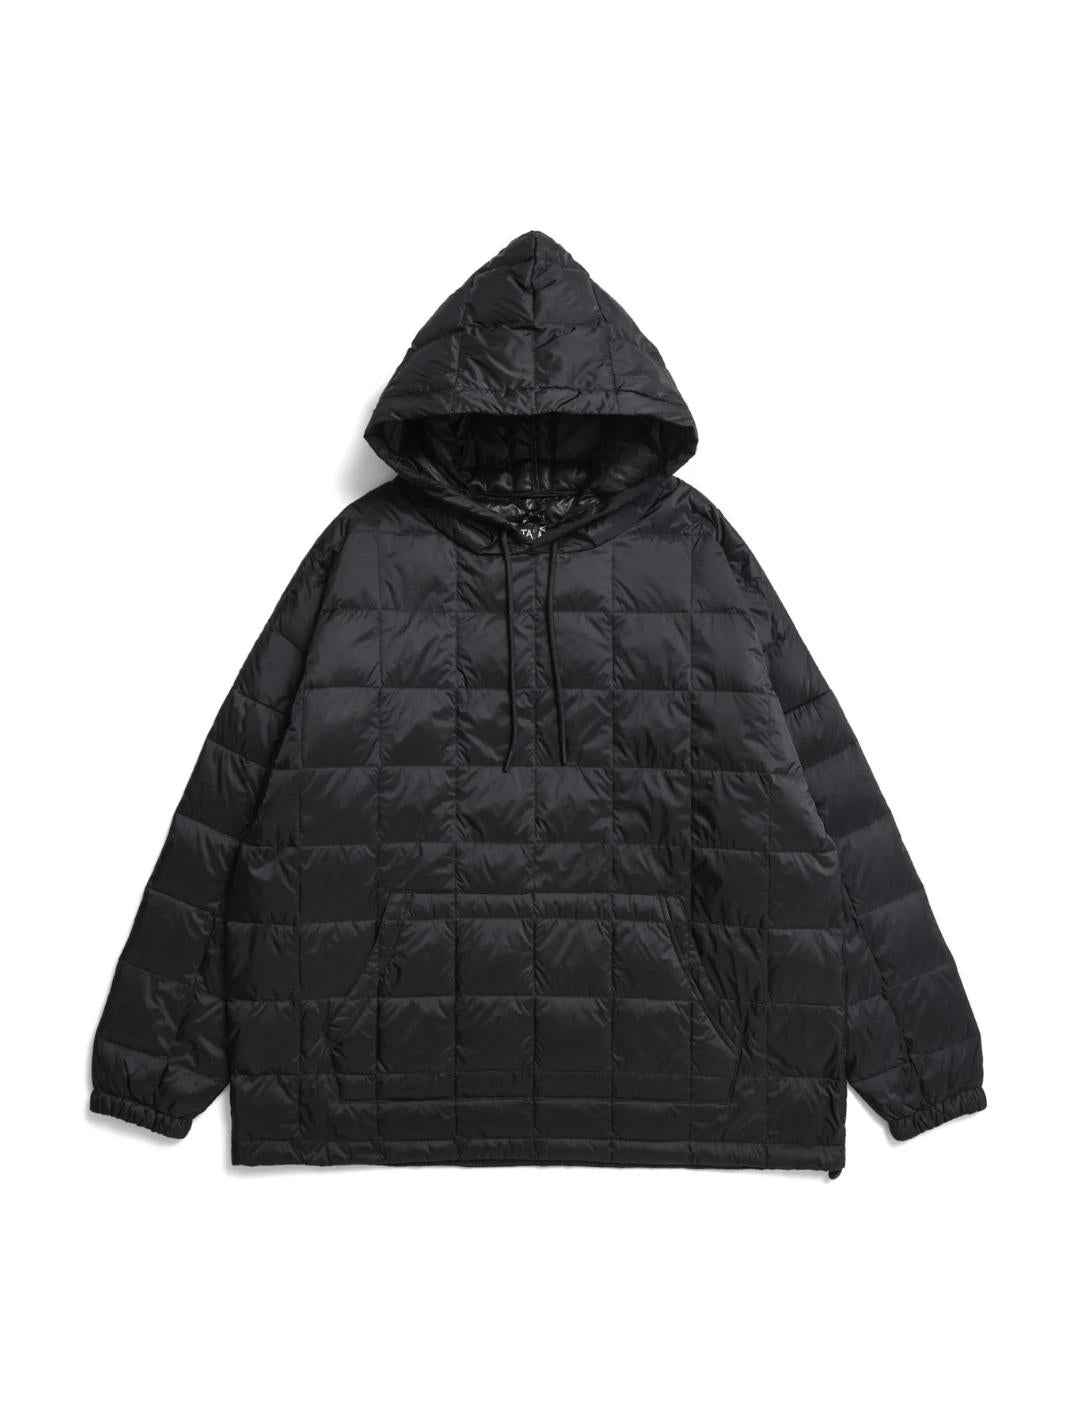 Taion Outerwear Anorakk | Oversized Down Hoodie Black